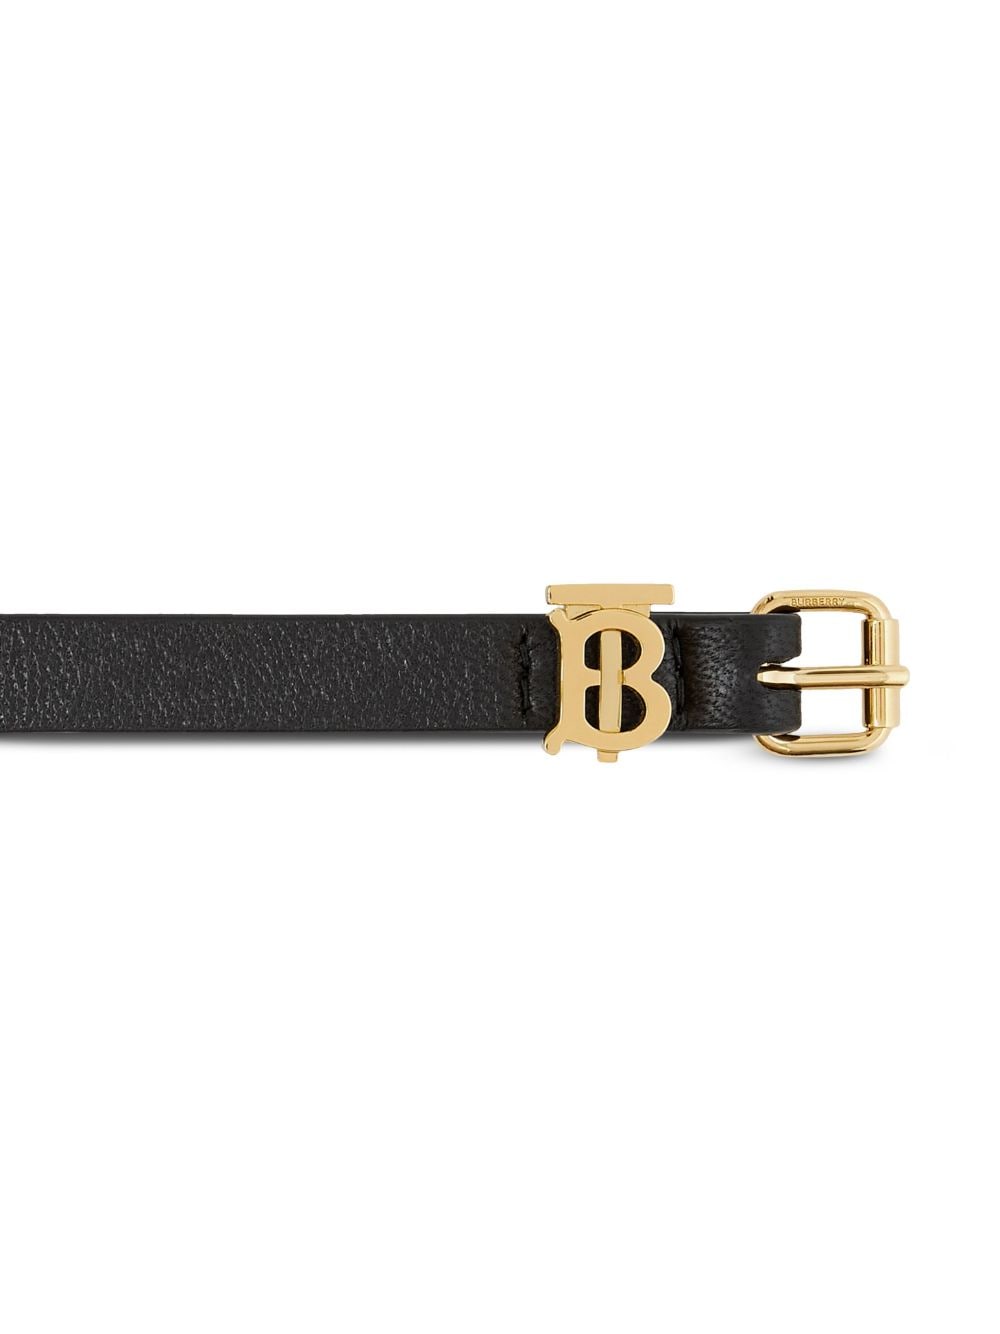 Burberry Monogram Leather Bracelet - Farfetch